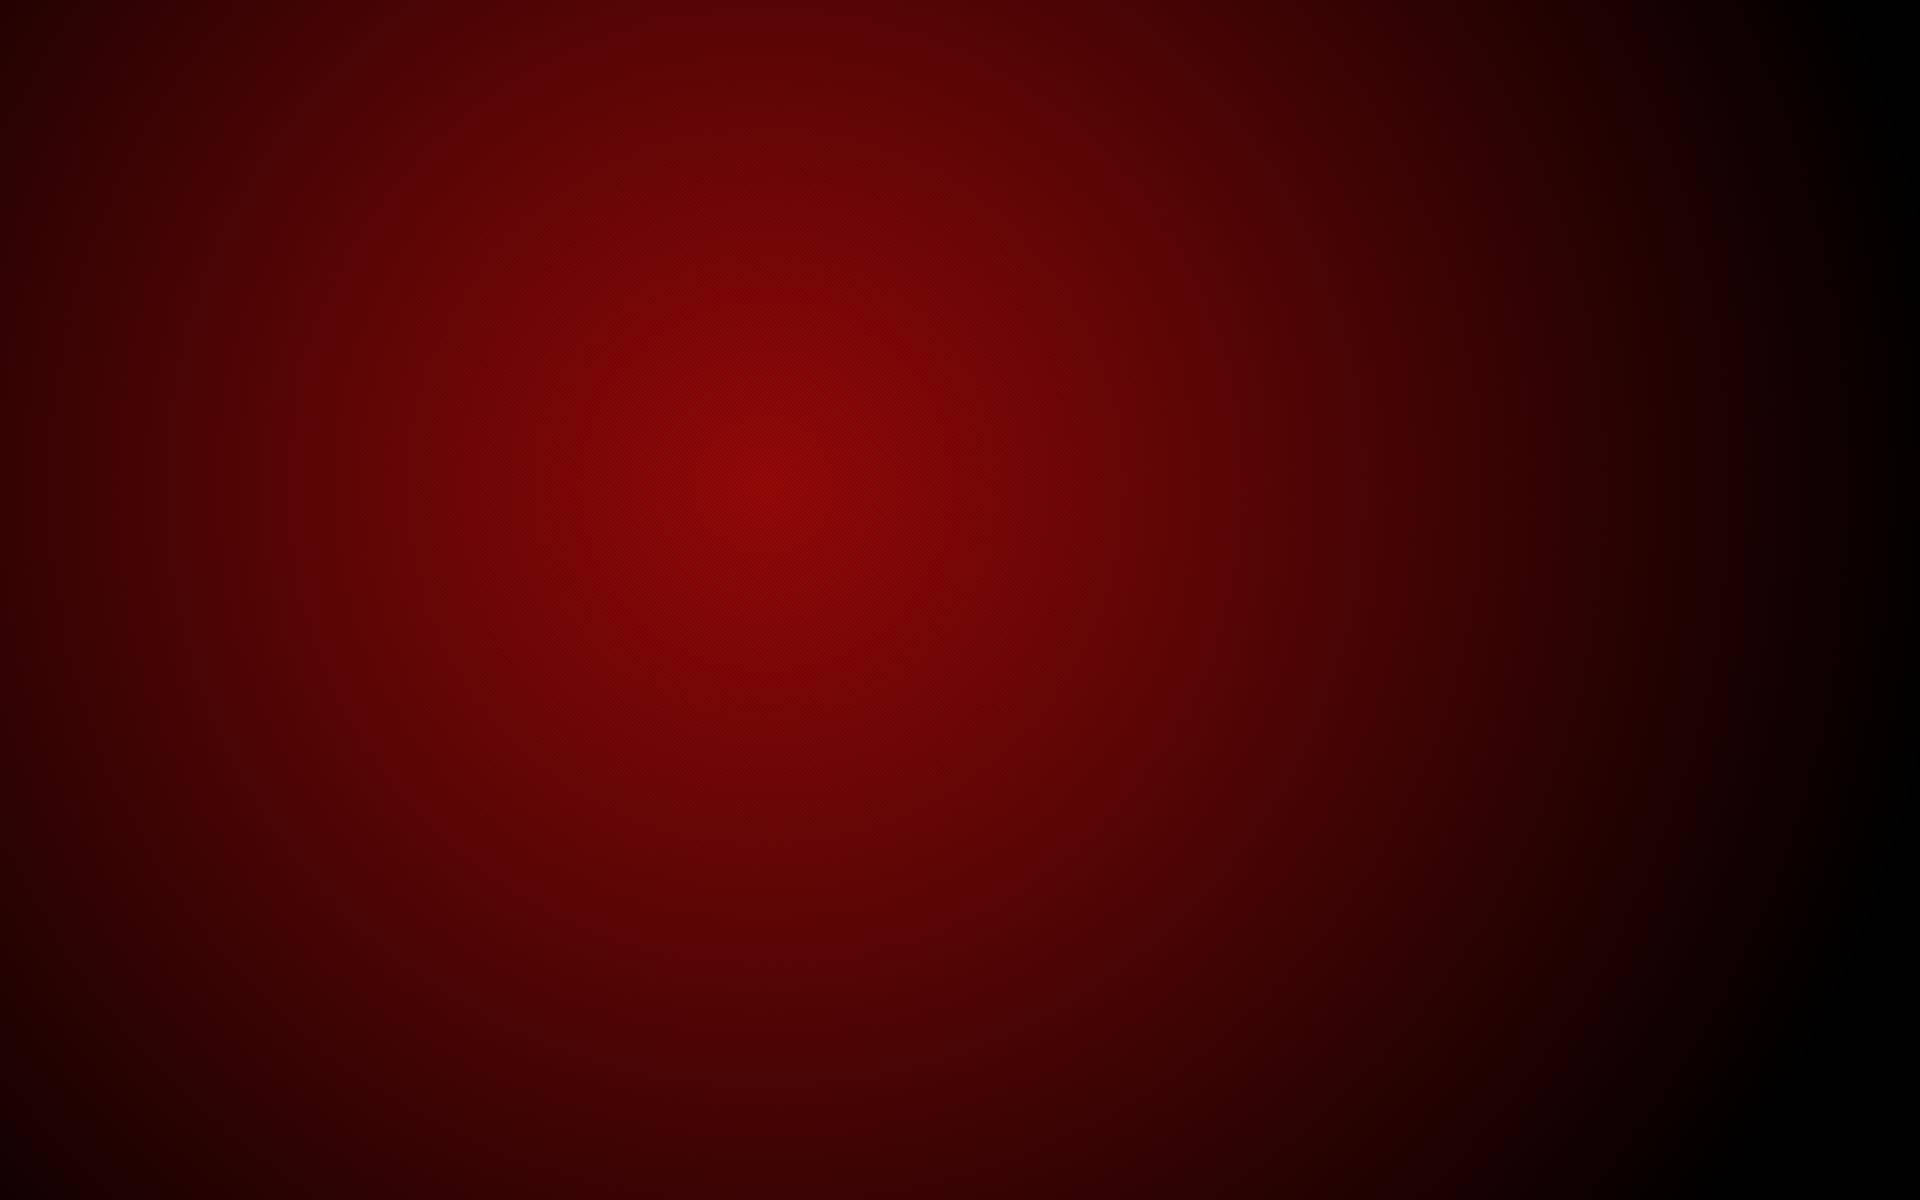 Plain Red Solid Color Background Solid Color Background Red Background  Image And Wallpaper for Free Download